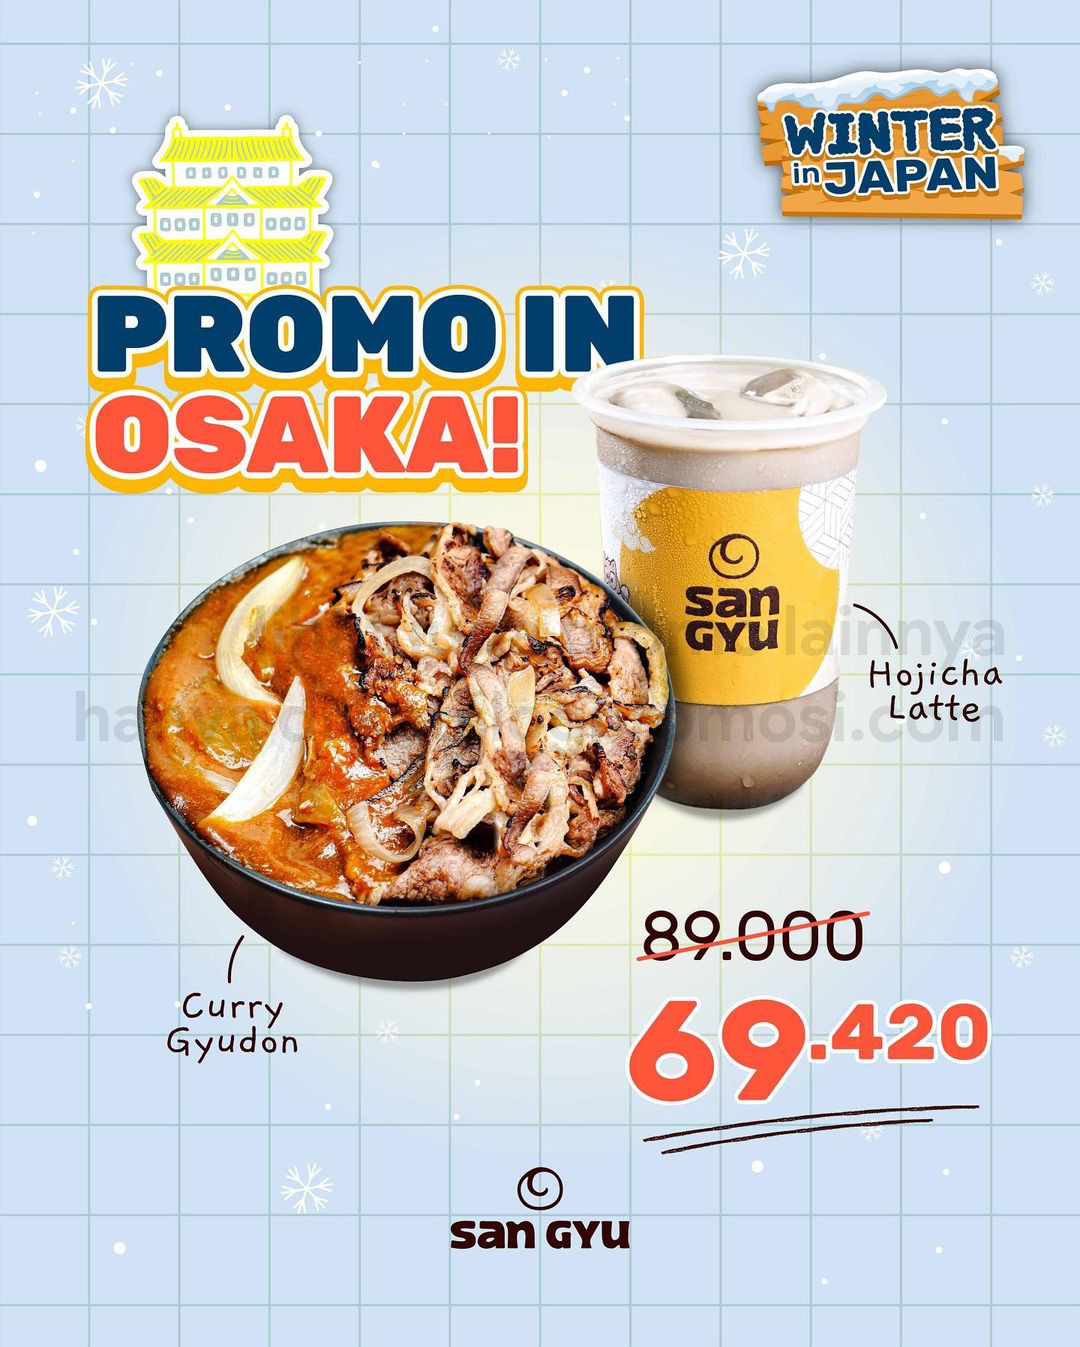 SAN GYU Promo In OSAKA - Paket Curry Gyudon + Hojicha Latte cuma Rp. 69.420